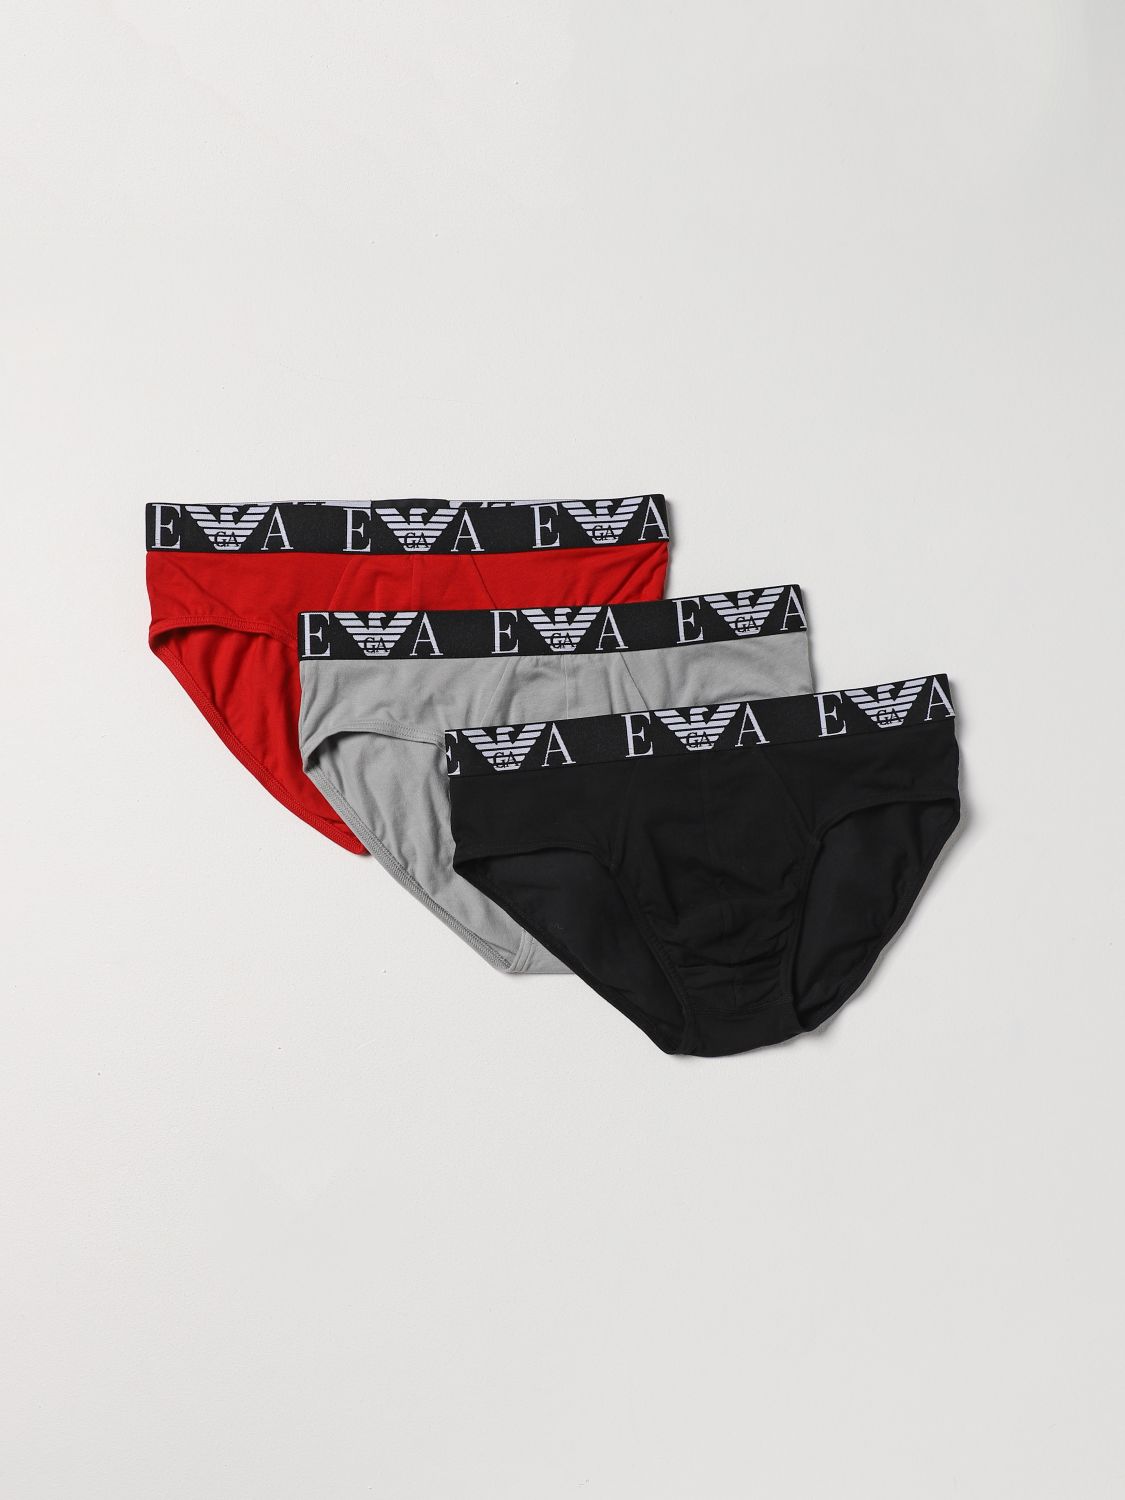 Emporio Armani Underwear Underwear EMPORIO ARMANI UNDERWEAR Men colour Red